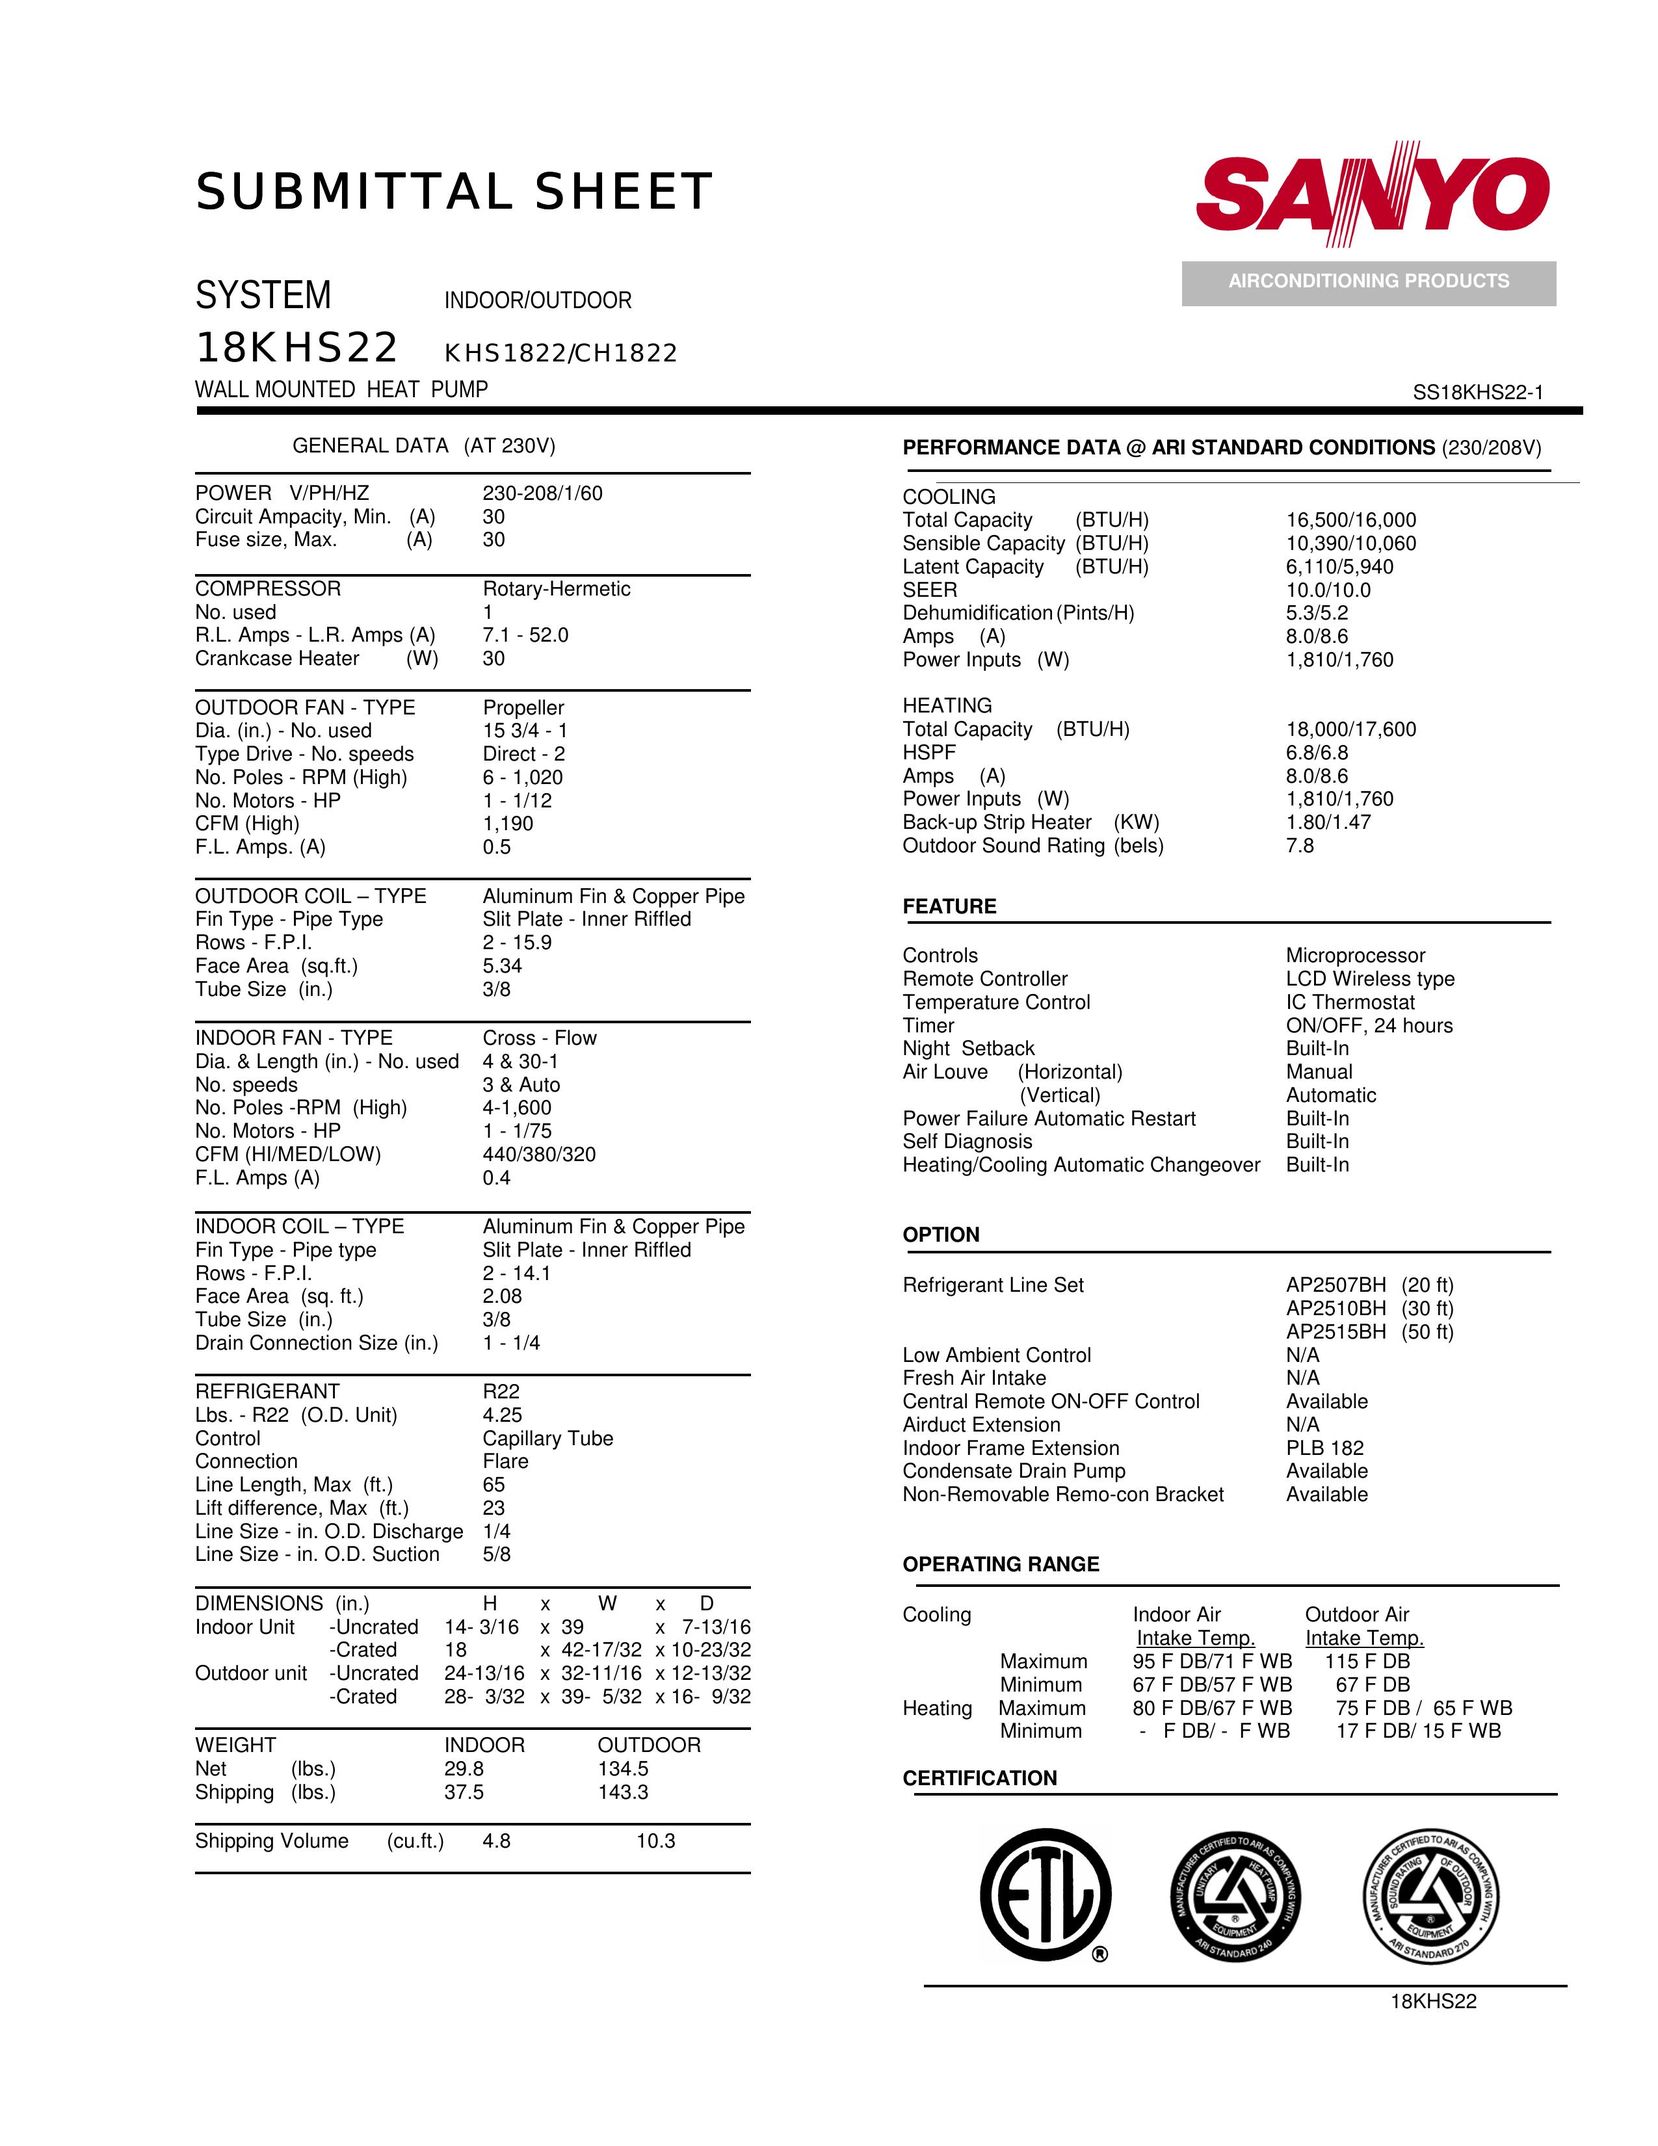 Sanyo 18KHS22 Heat Pump User Manual